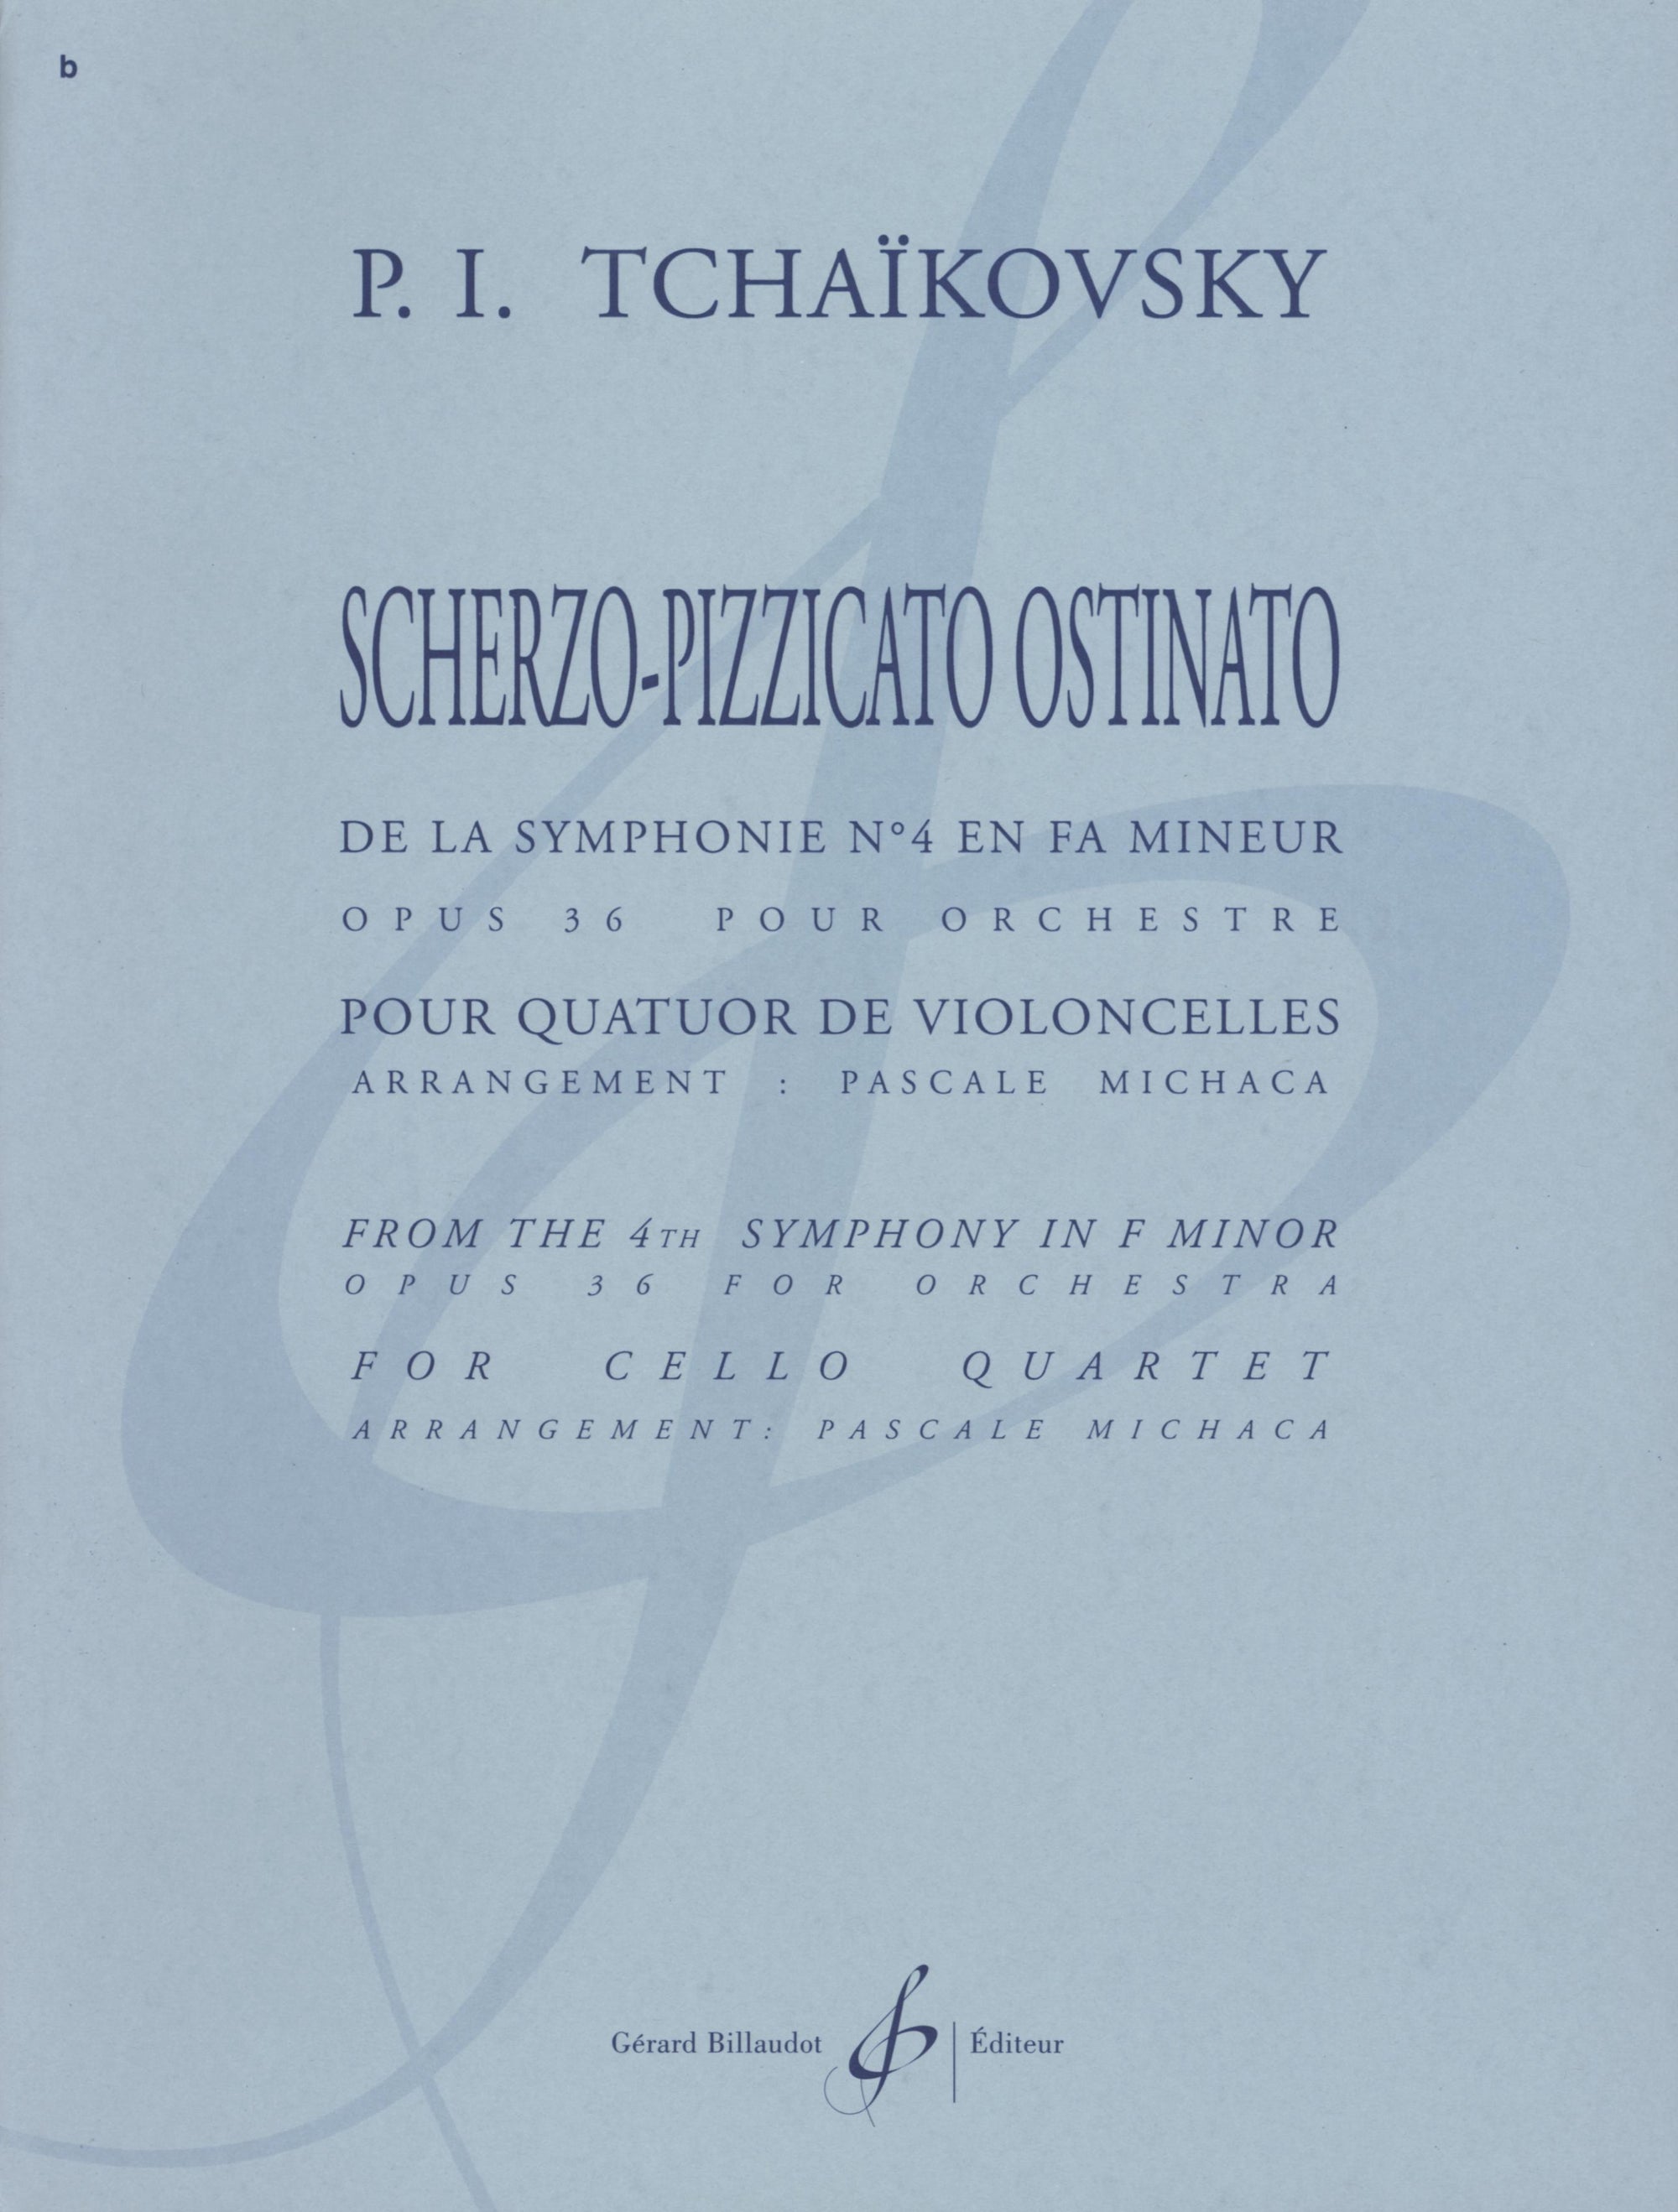 Tchaikovsky: Scherzo-Pizzicato Ostinato from Symphony No. 4 (arr. for cello quartet)